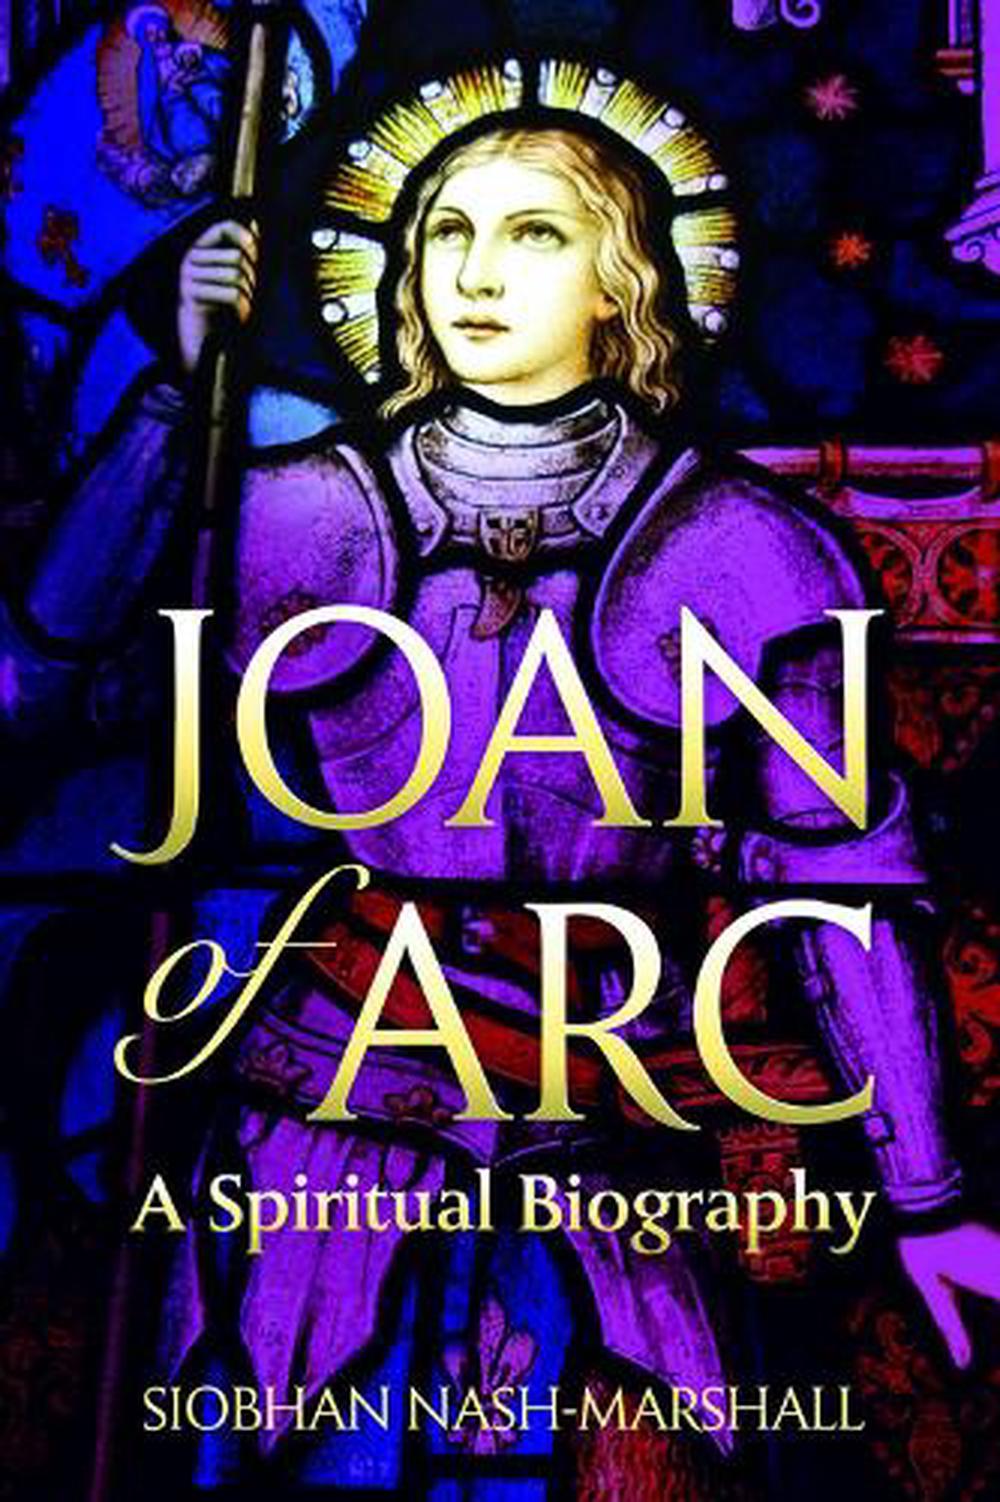 joan-of-arc-a-spiritual-biography-by-siobhan-nash-marshall-paperback